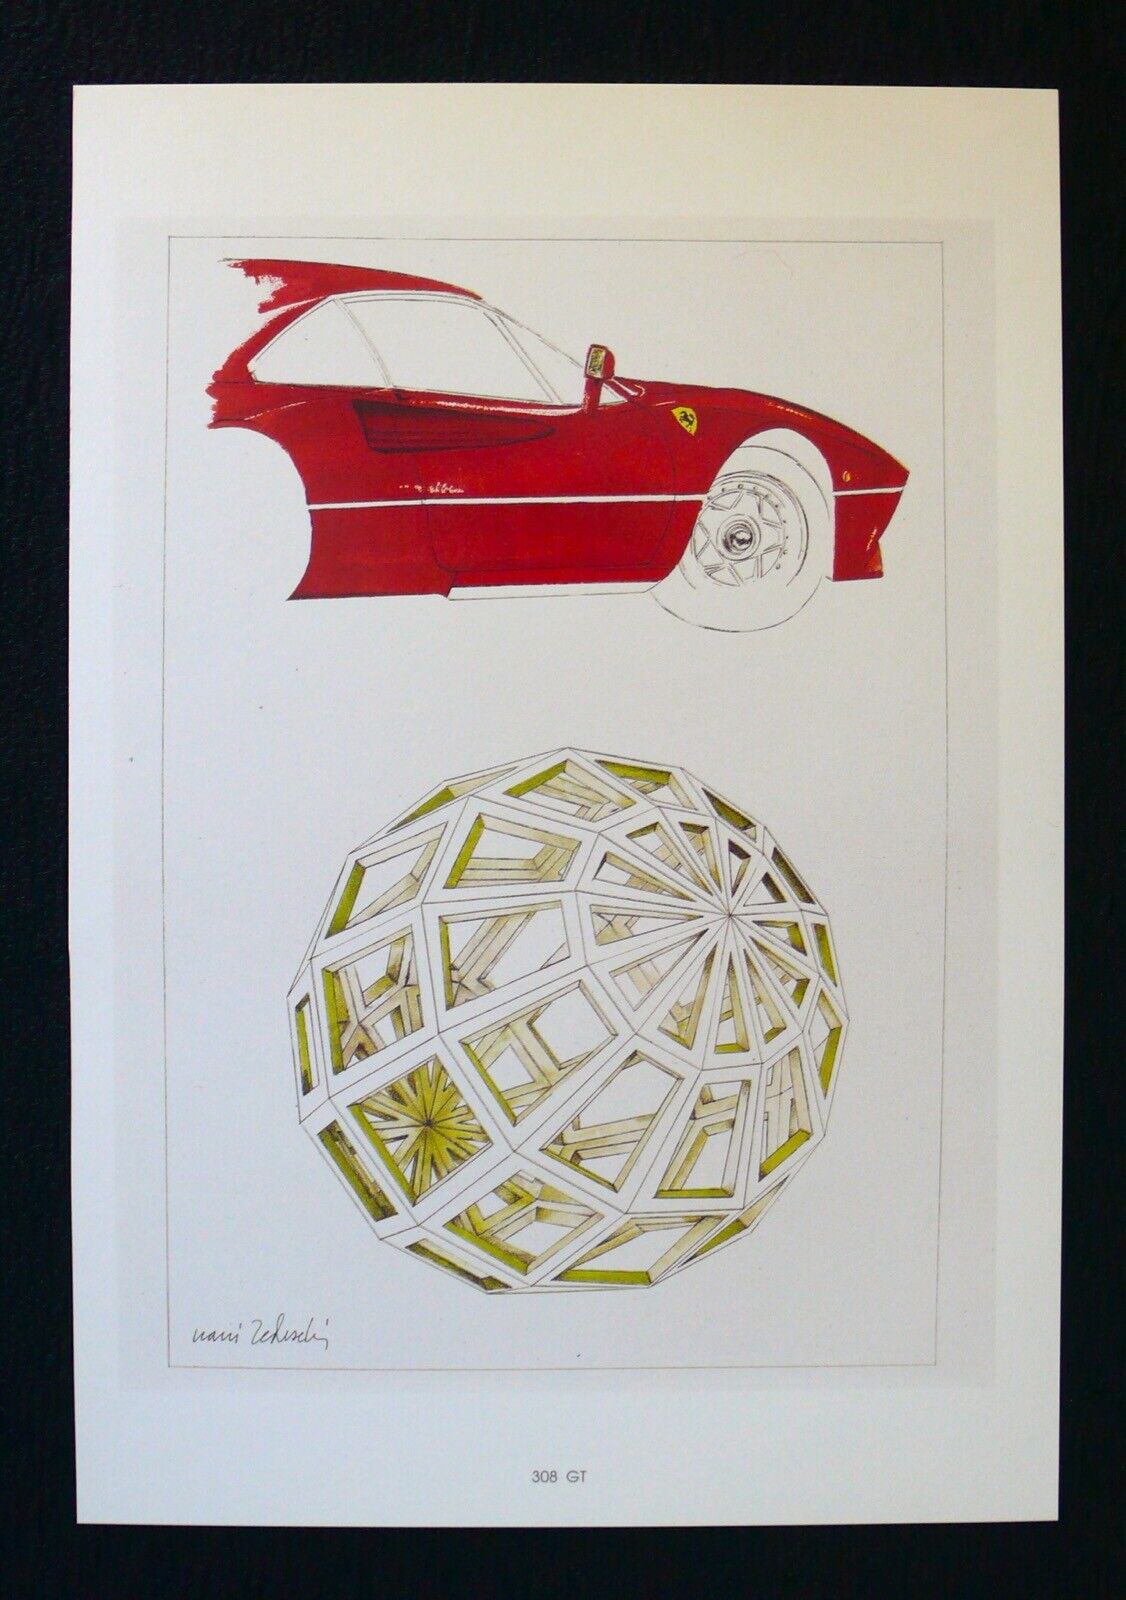 FERRARI 308 GT Pininfarina Art Print NANI TEDESCHI 